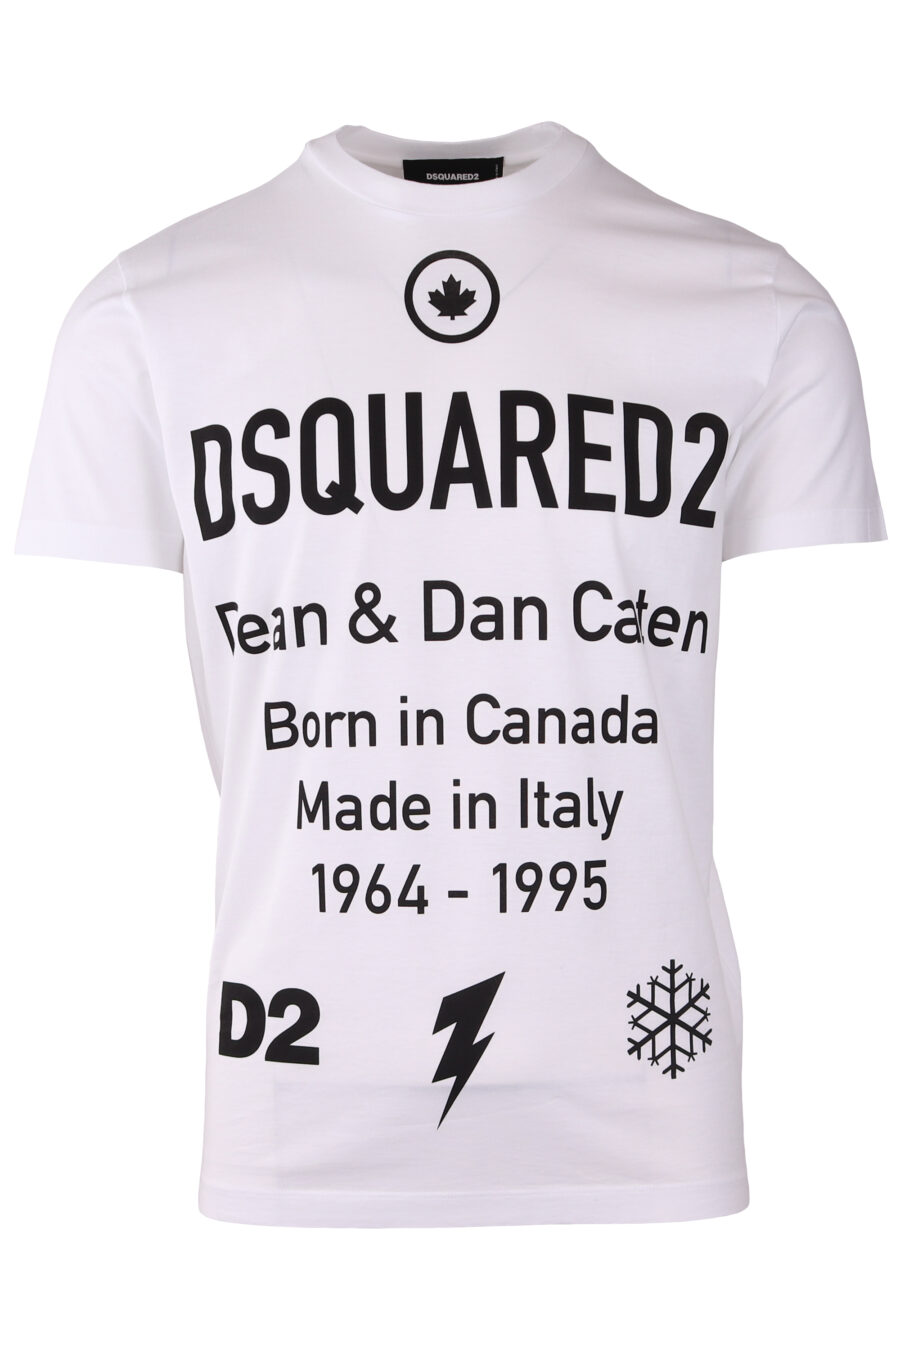 T-shirt branca com texto maxilogo "dean e dan caten" - IMG 8979